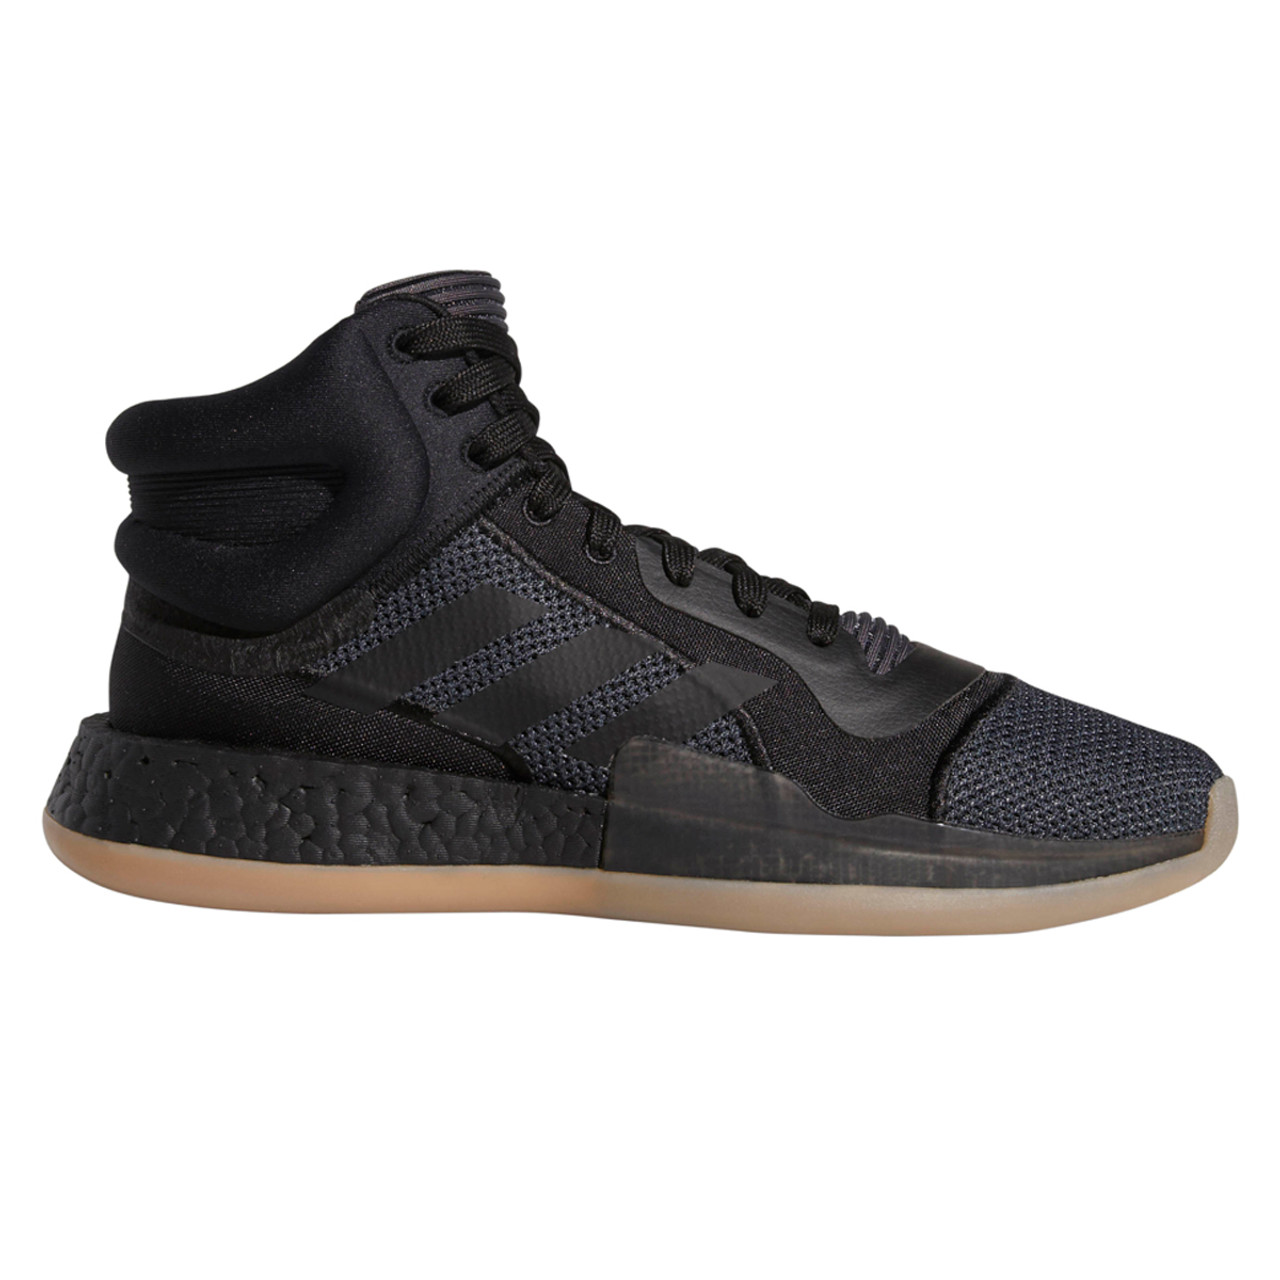 Adidas Marquee Boost Men's Basketball Sneakers - Gray, Black - everysportforless.com